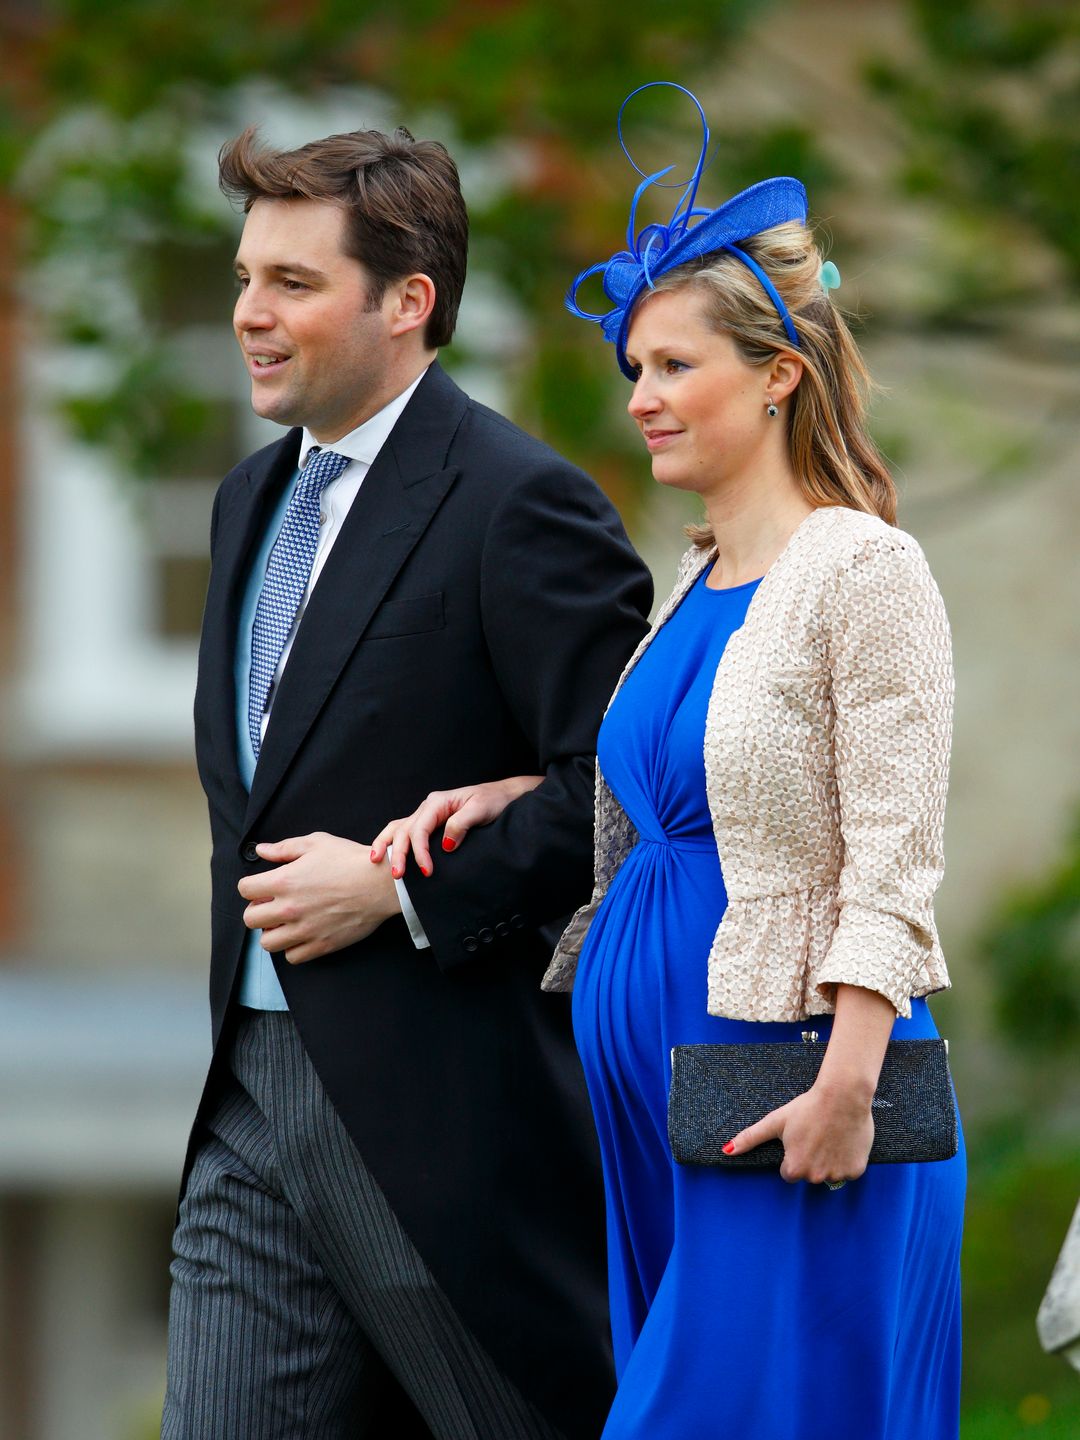 A pregnant Hannah Carter walking with husband Robert